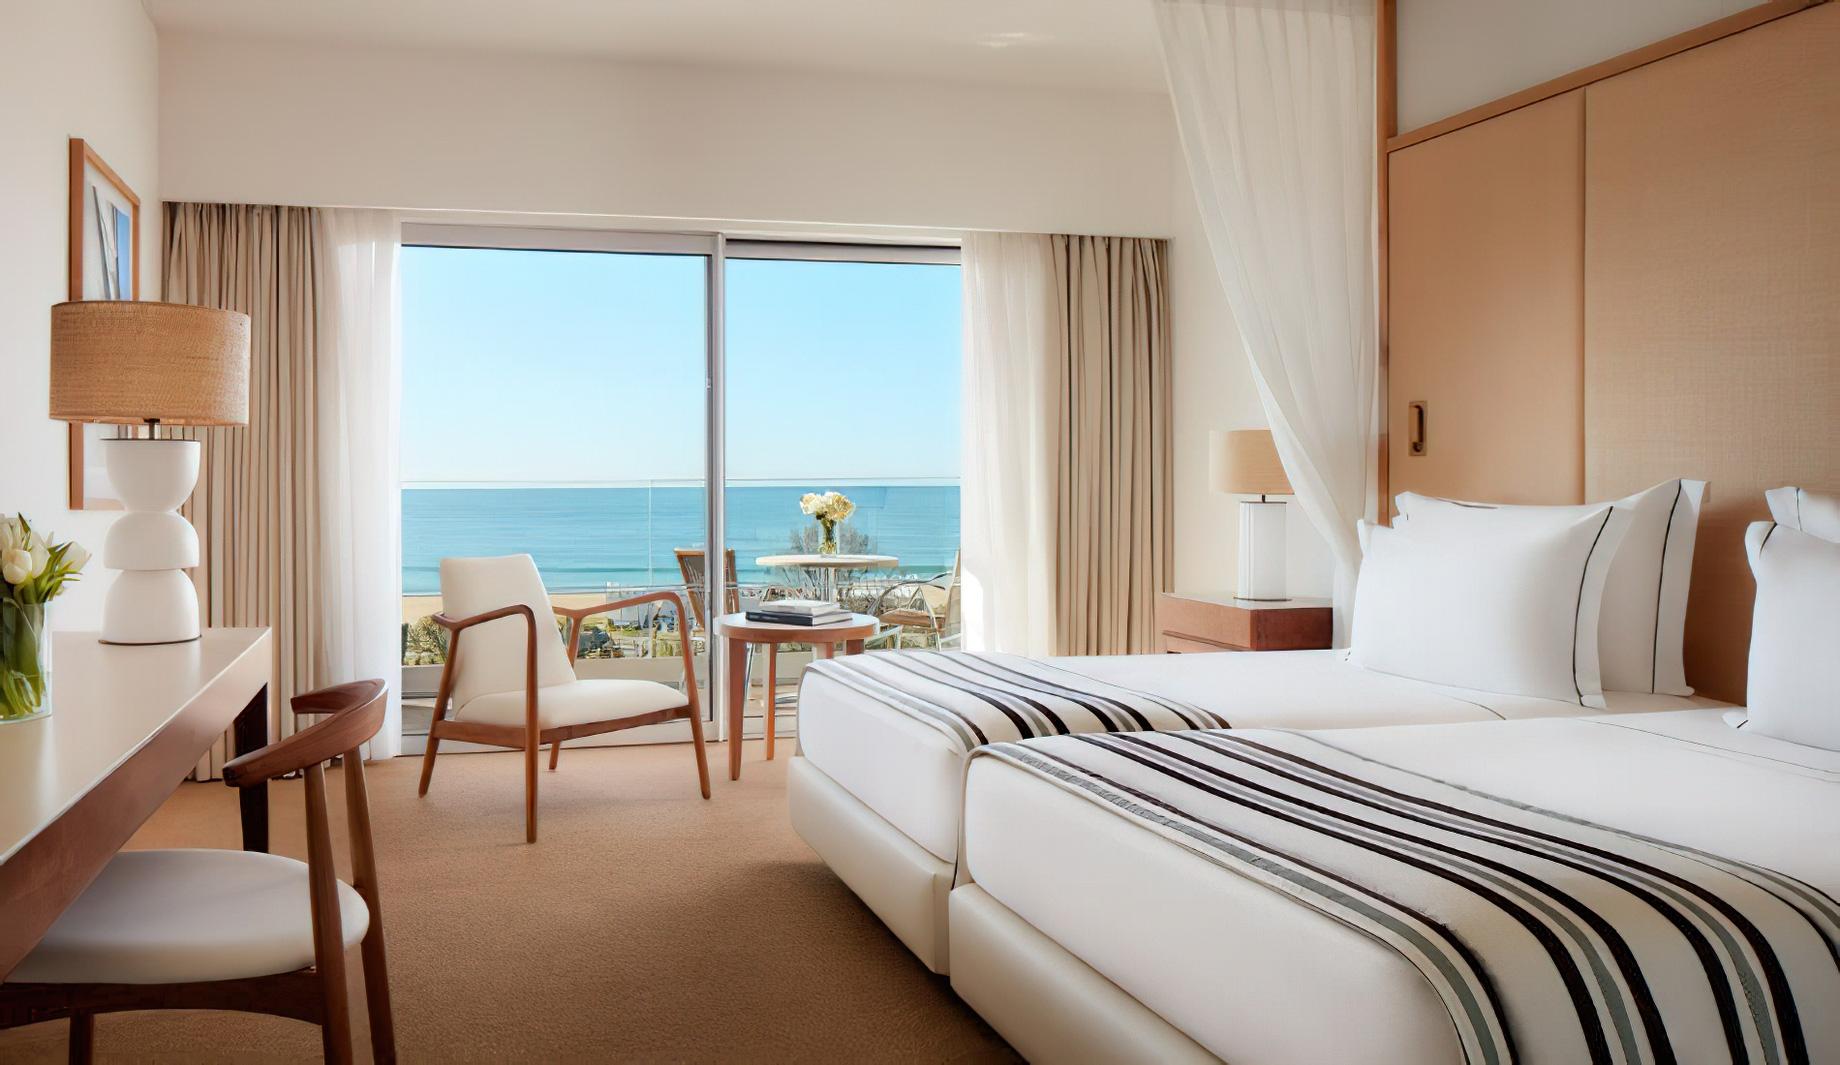 Tivoli Marina Vilamoura Algarve Resort - Portugal - Deluxe Room Sea View